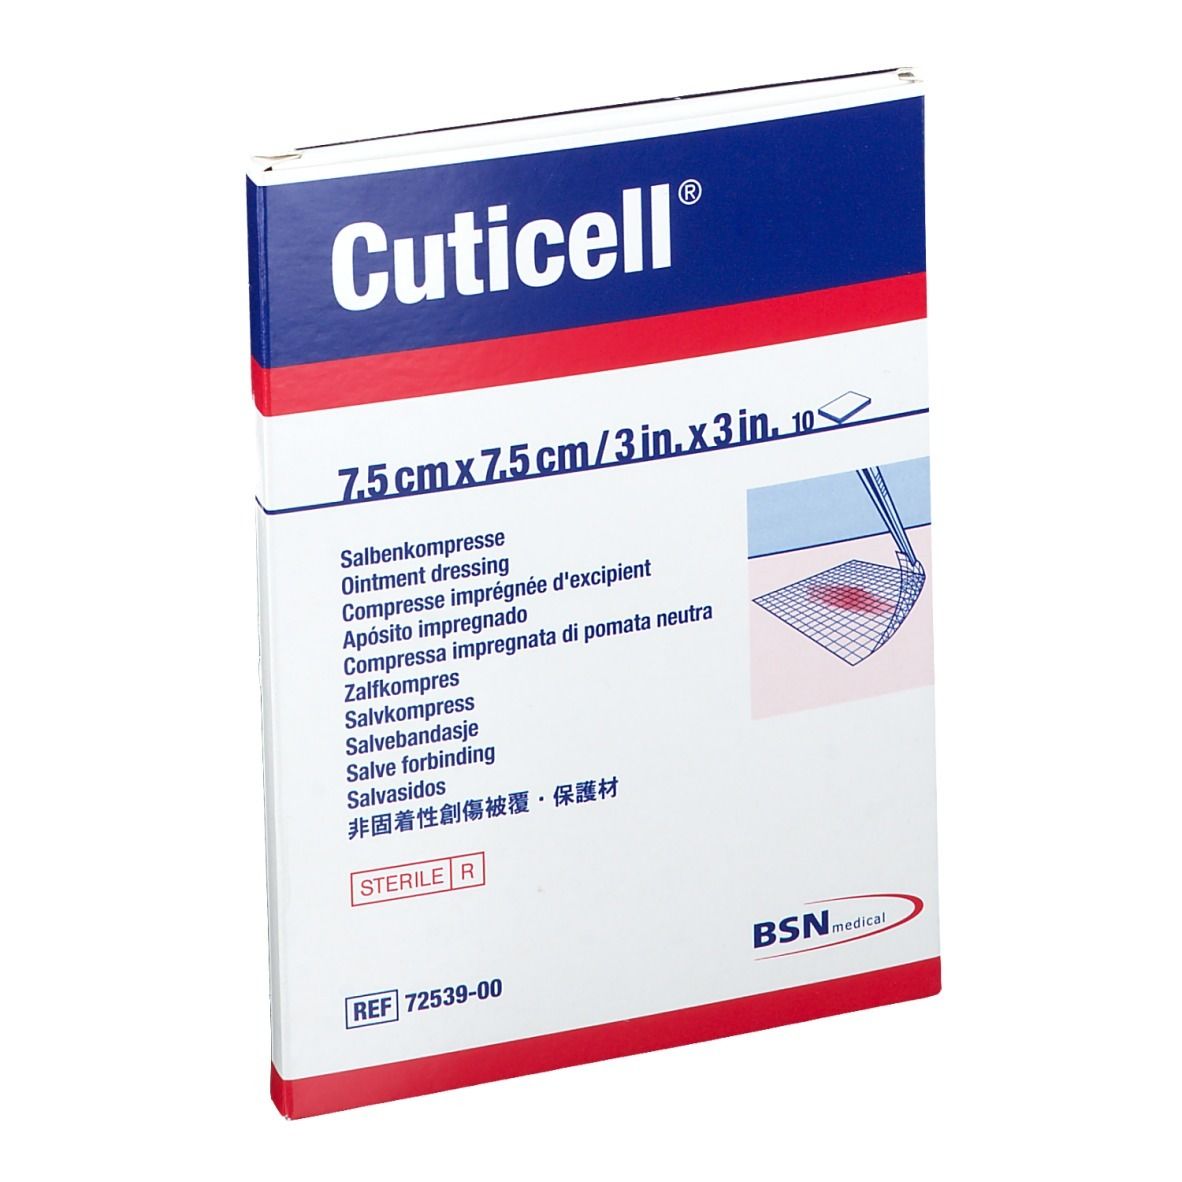 Cuticell® Salbenkompresse 7,5 cm x 7,5 cm